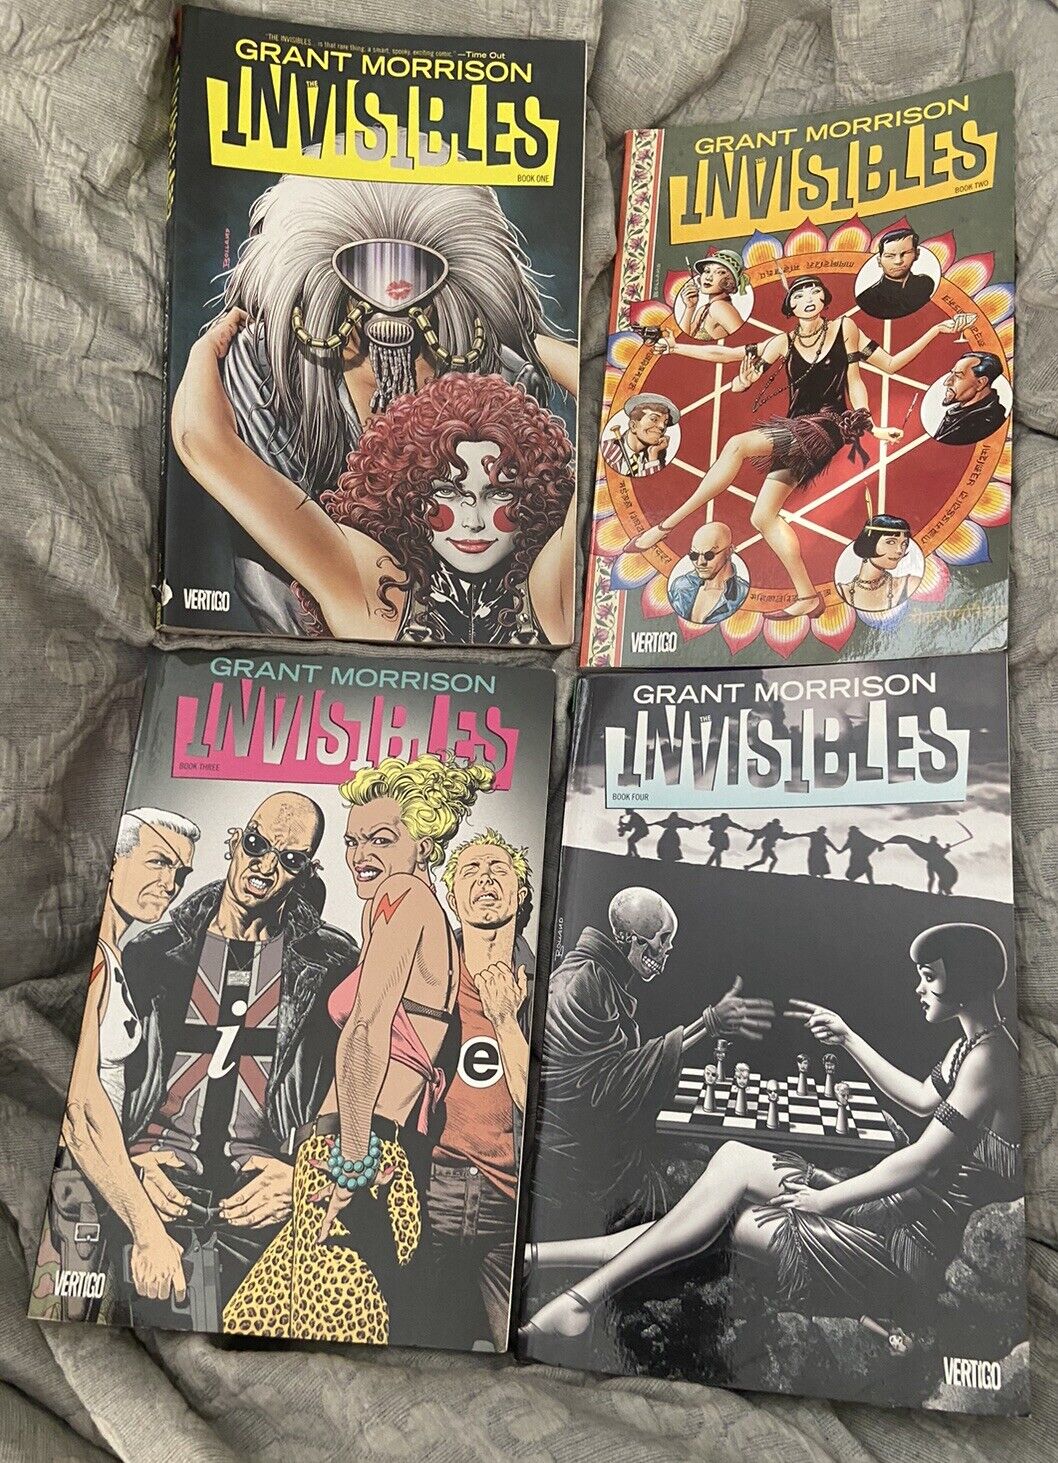 The Invisibles Vol 1-4 Grant Morrison TPB DC Comics Vertigo OOP Complete Books